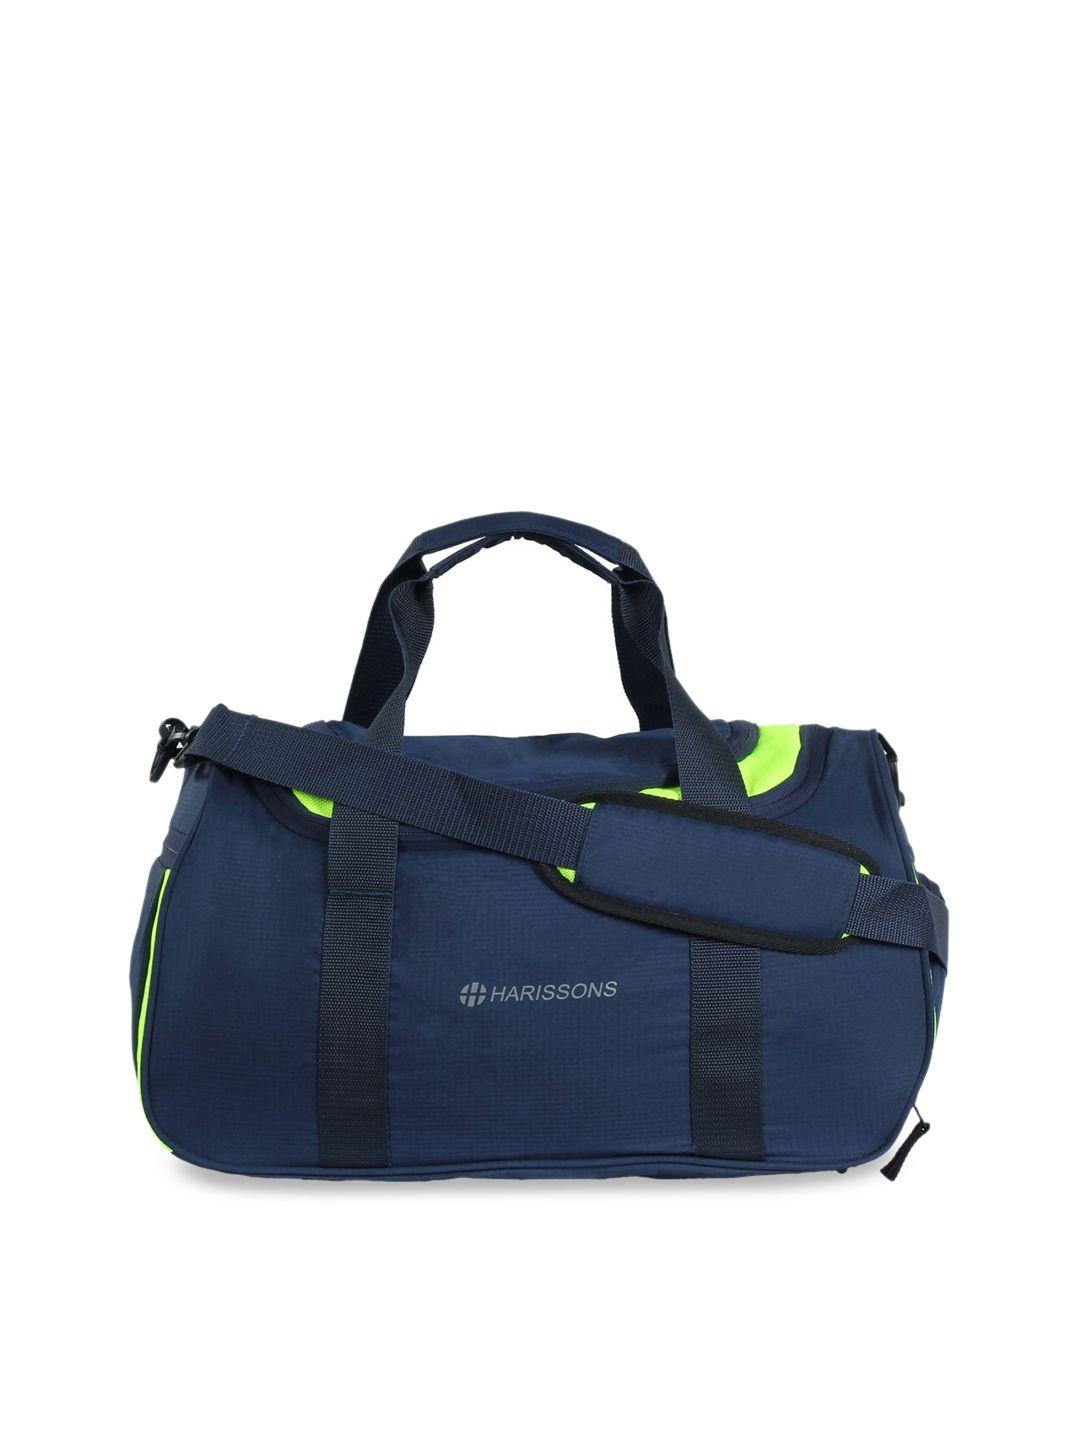 harissons adult navy blue & fluorescent green float gym travel duffel bag